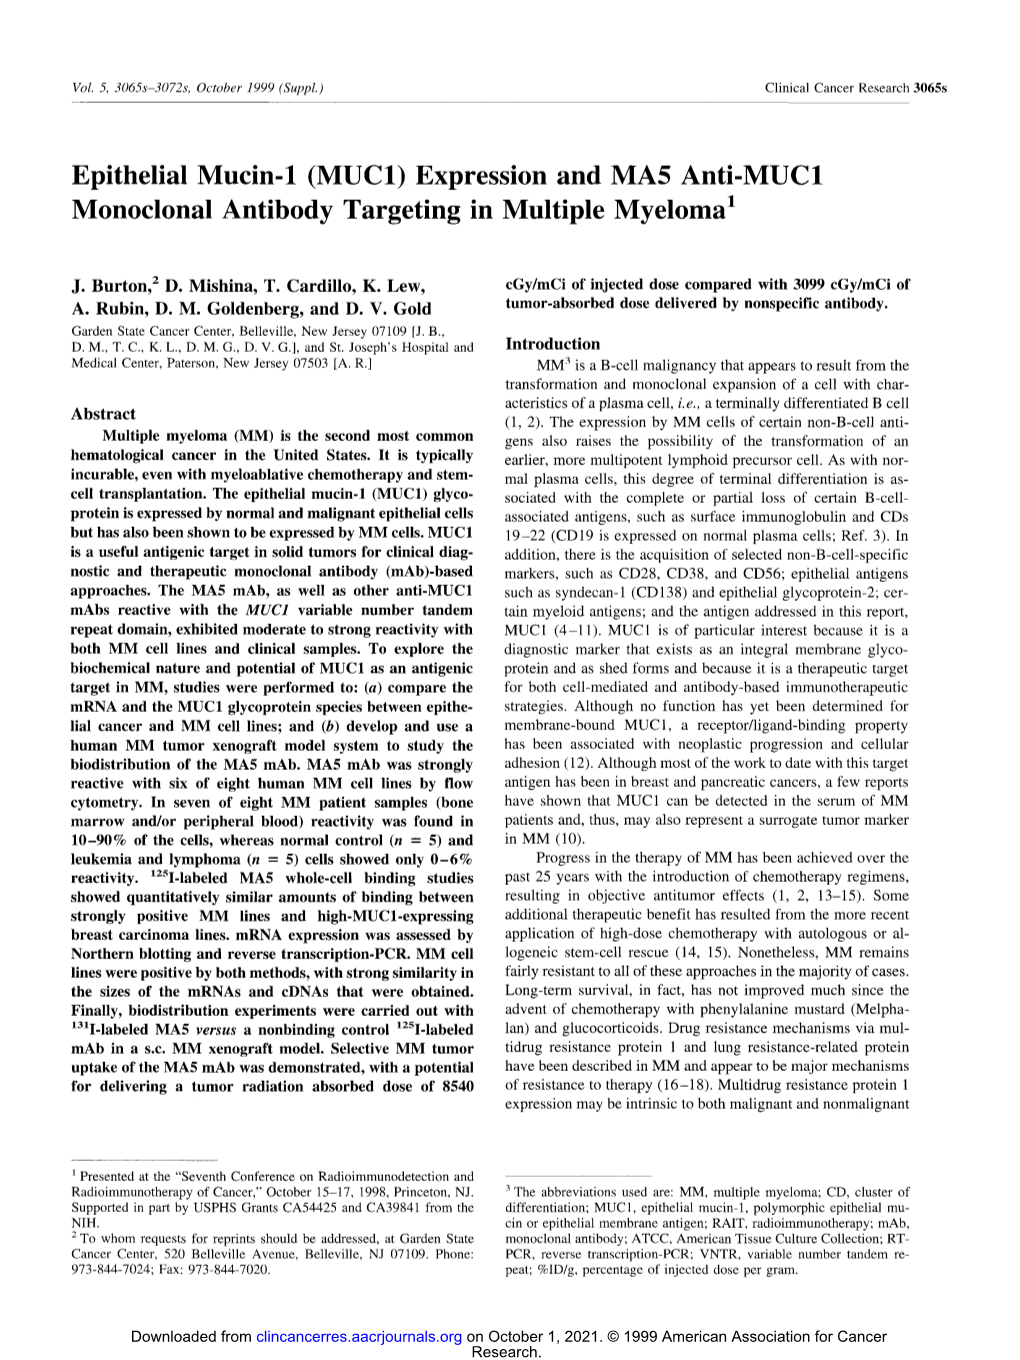 Epithelial Mucin-1 (MUCI) Expression and MA5 Anti-MUC1 Monoclonal Antibody Targeting in Multiple Myeloma I